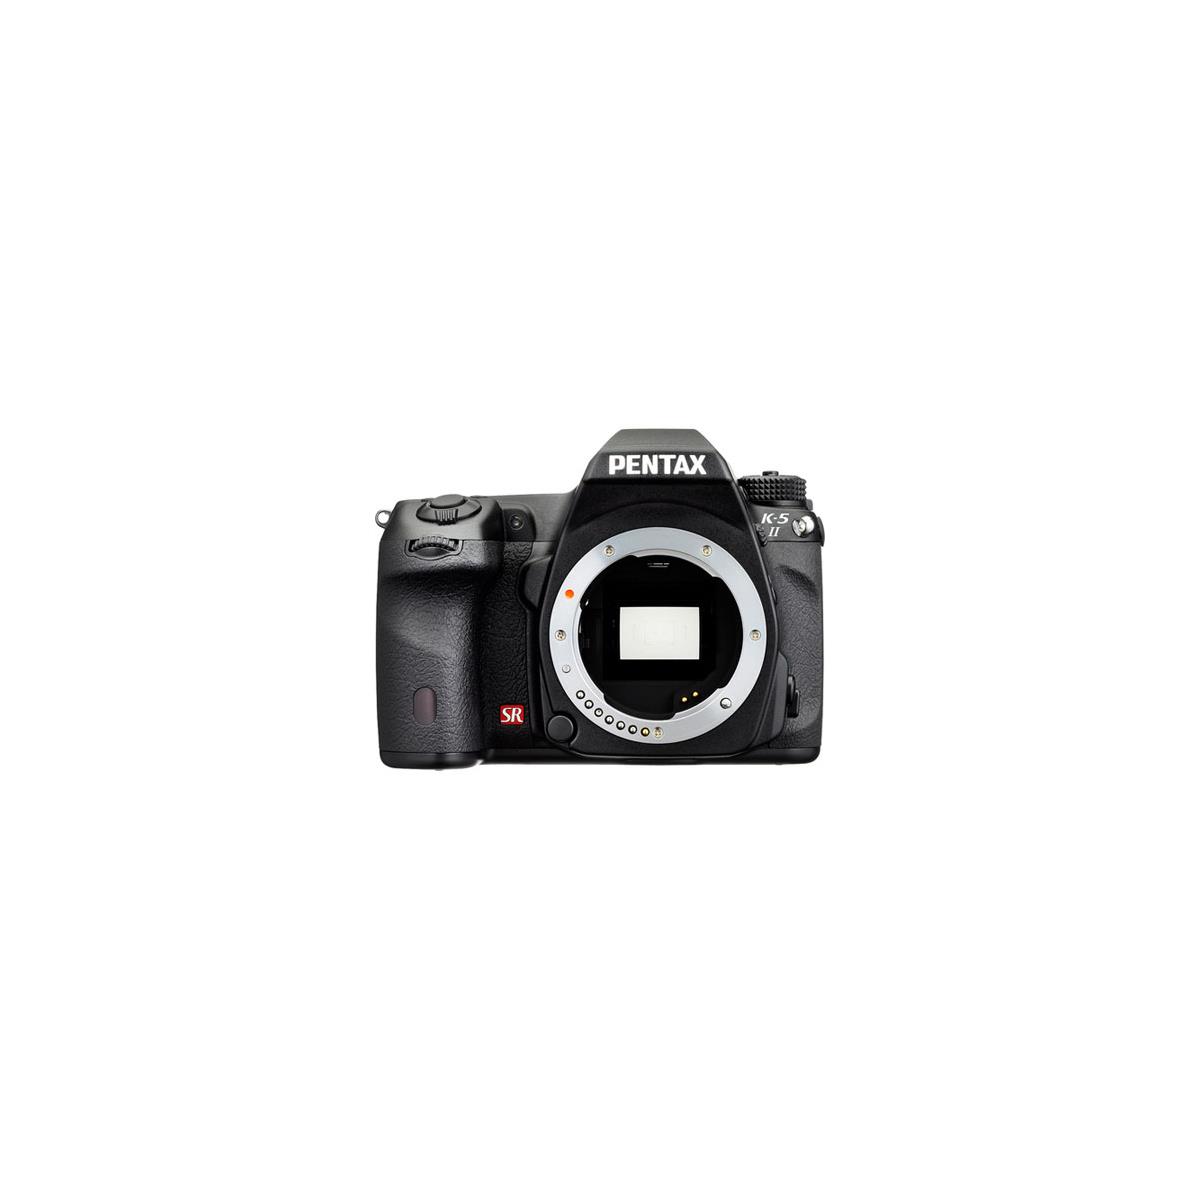 Pentax K-5 II Digital SLR Camera Body